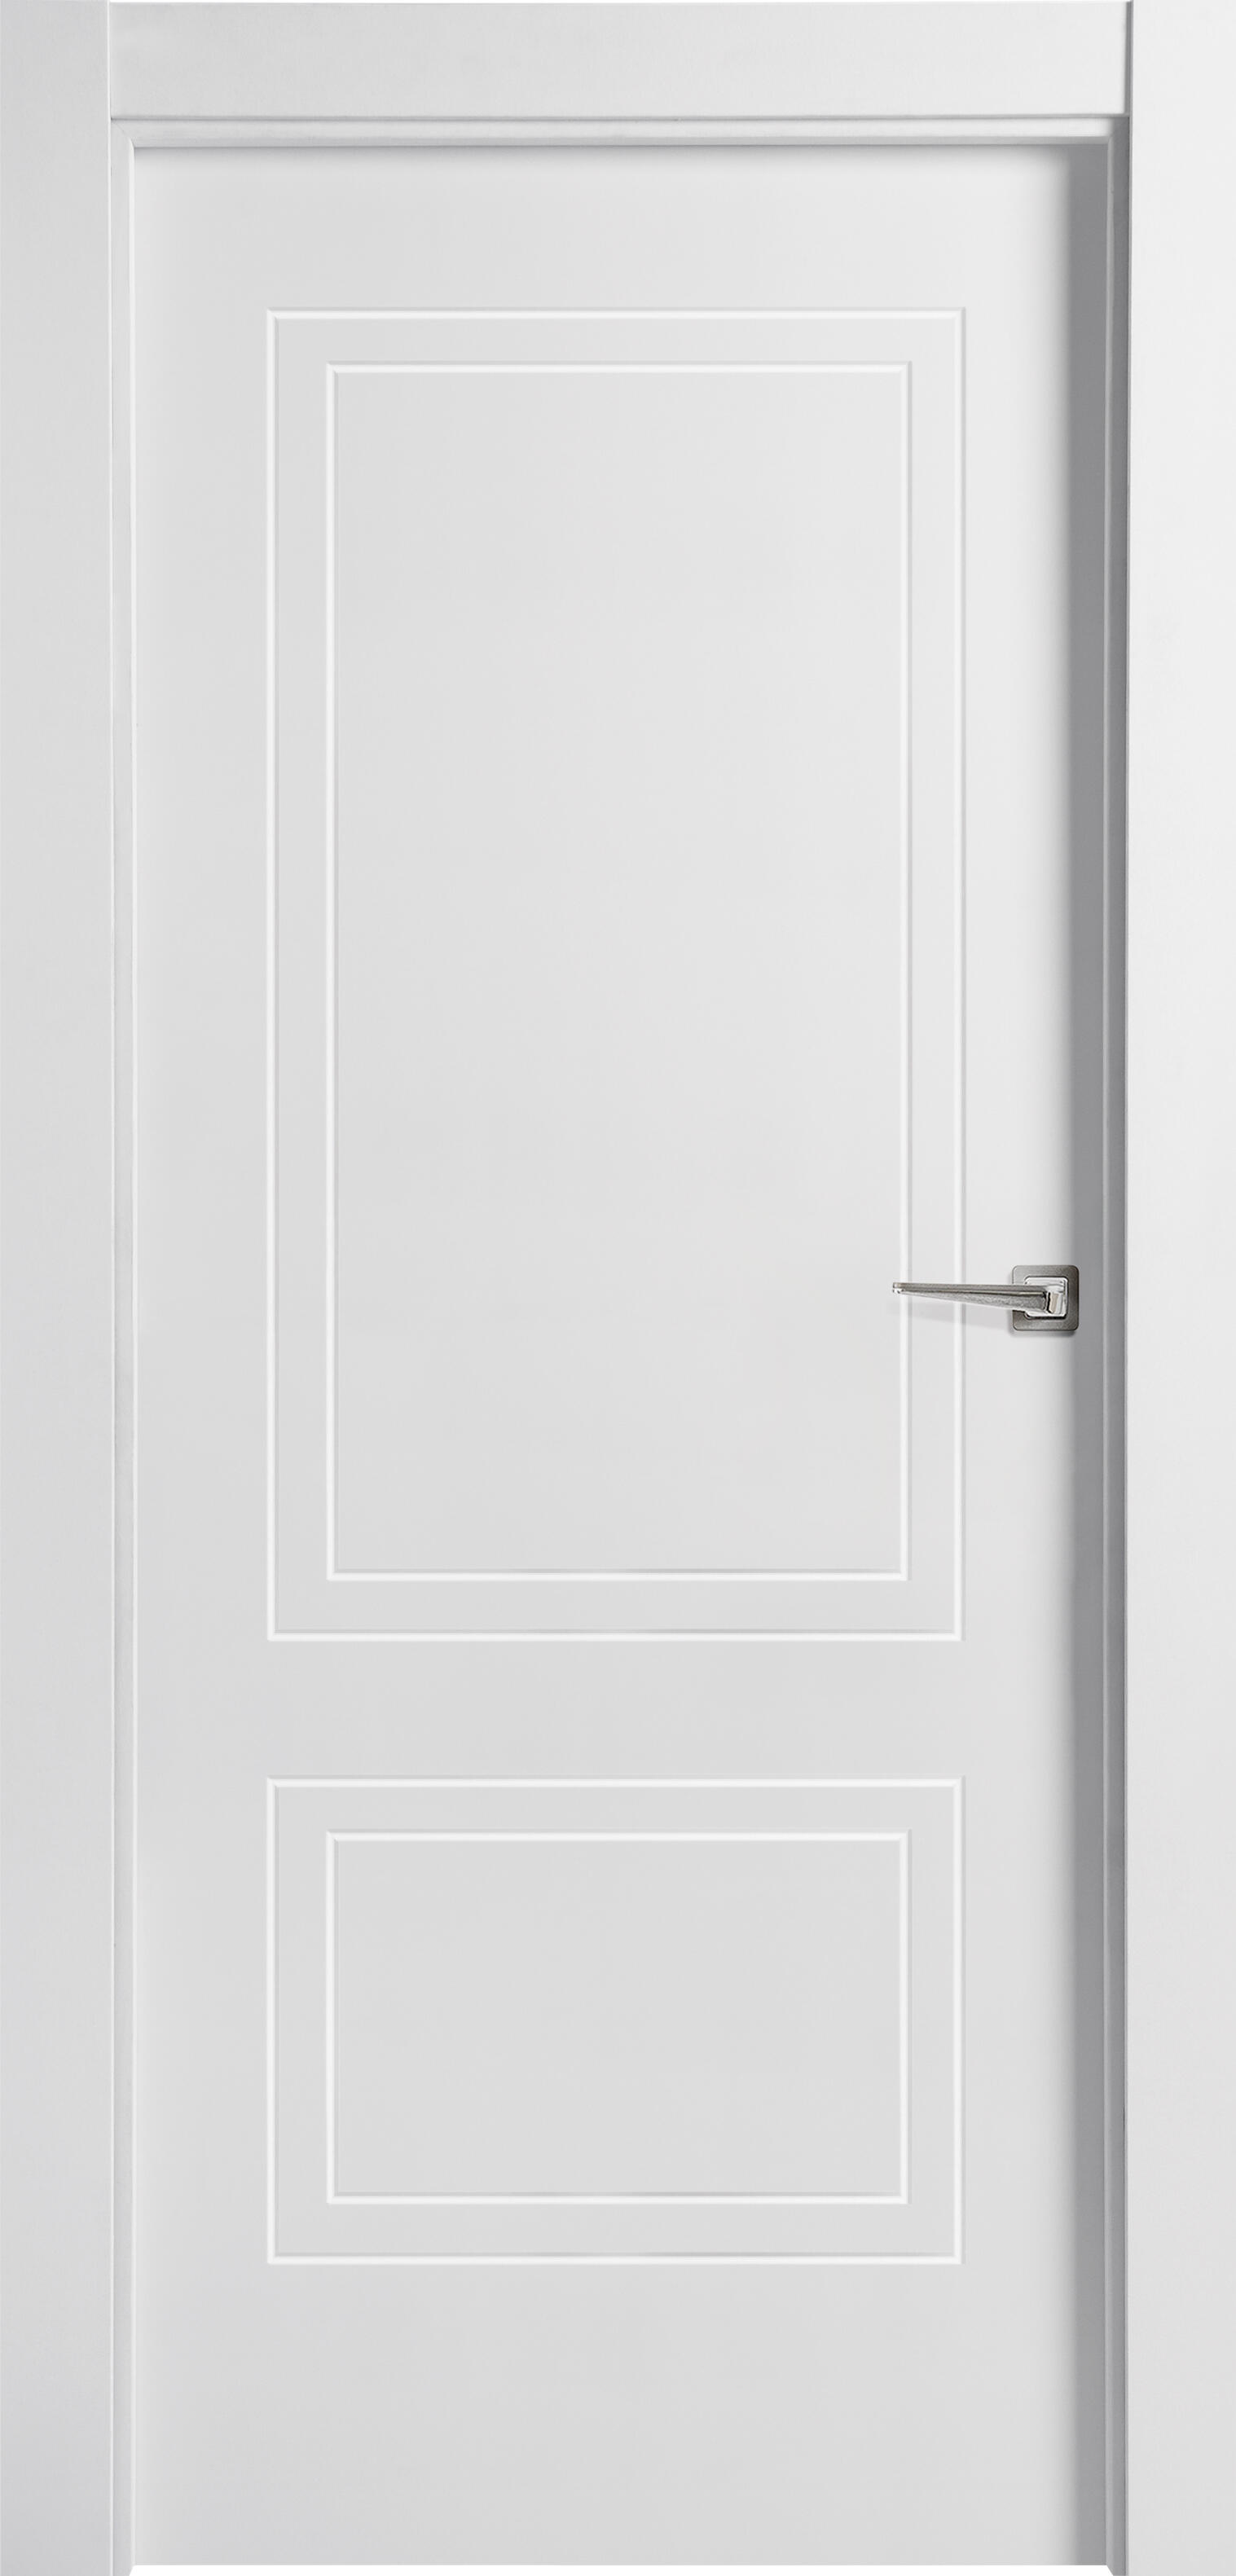 Puerta boston blanco de apertura izquierda de 11x 62.5 cm